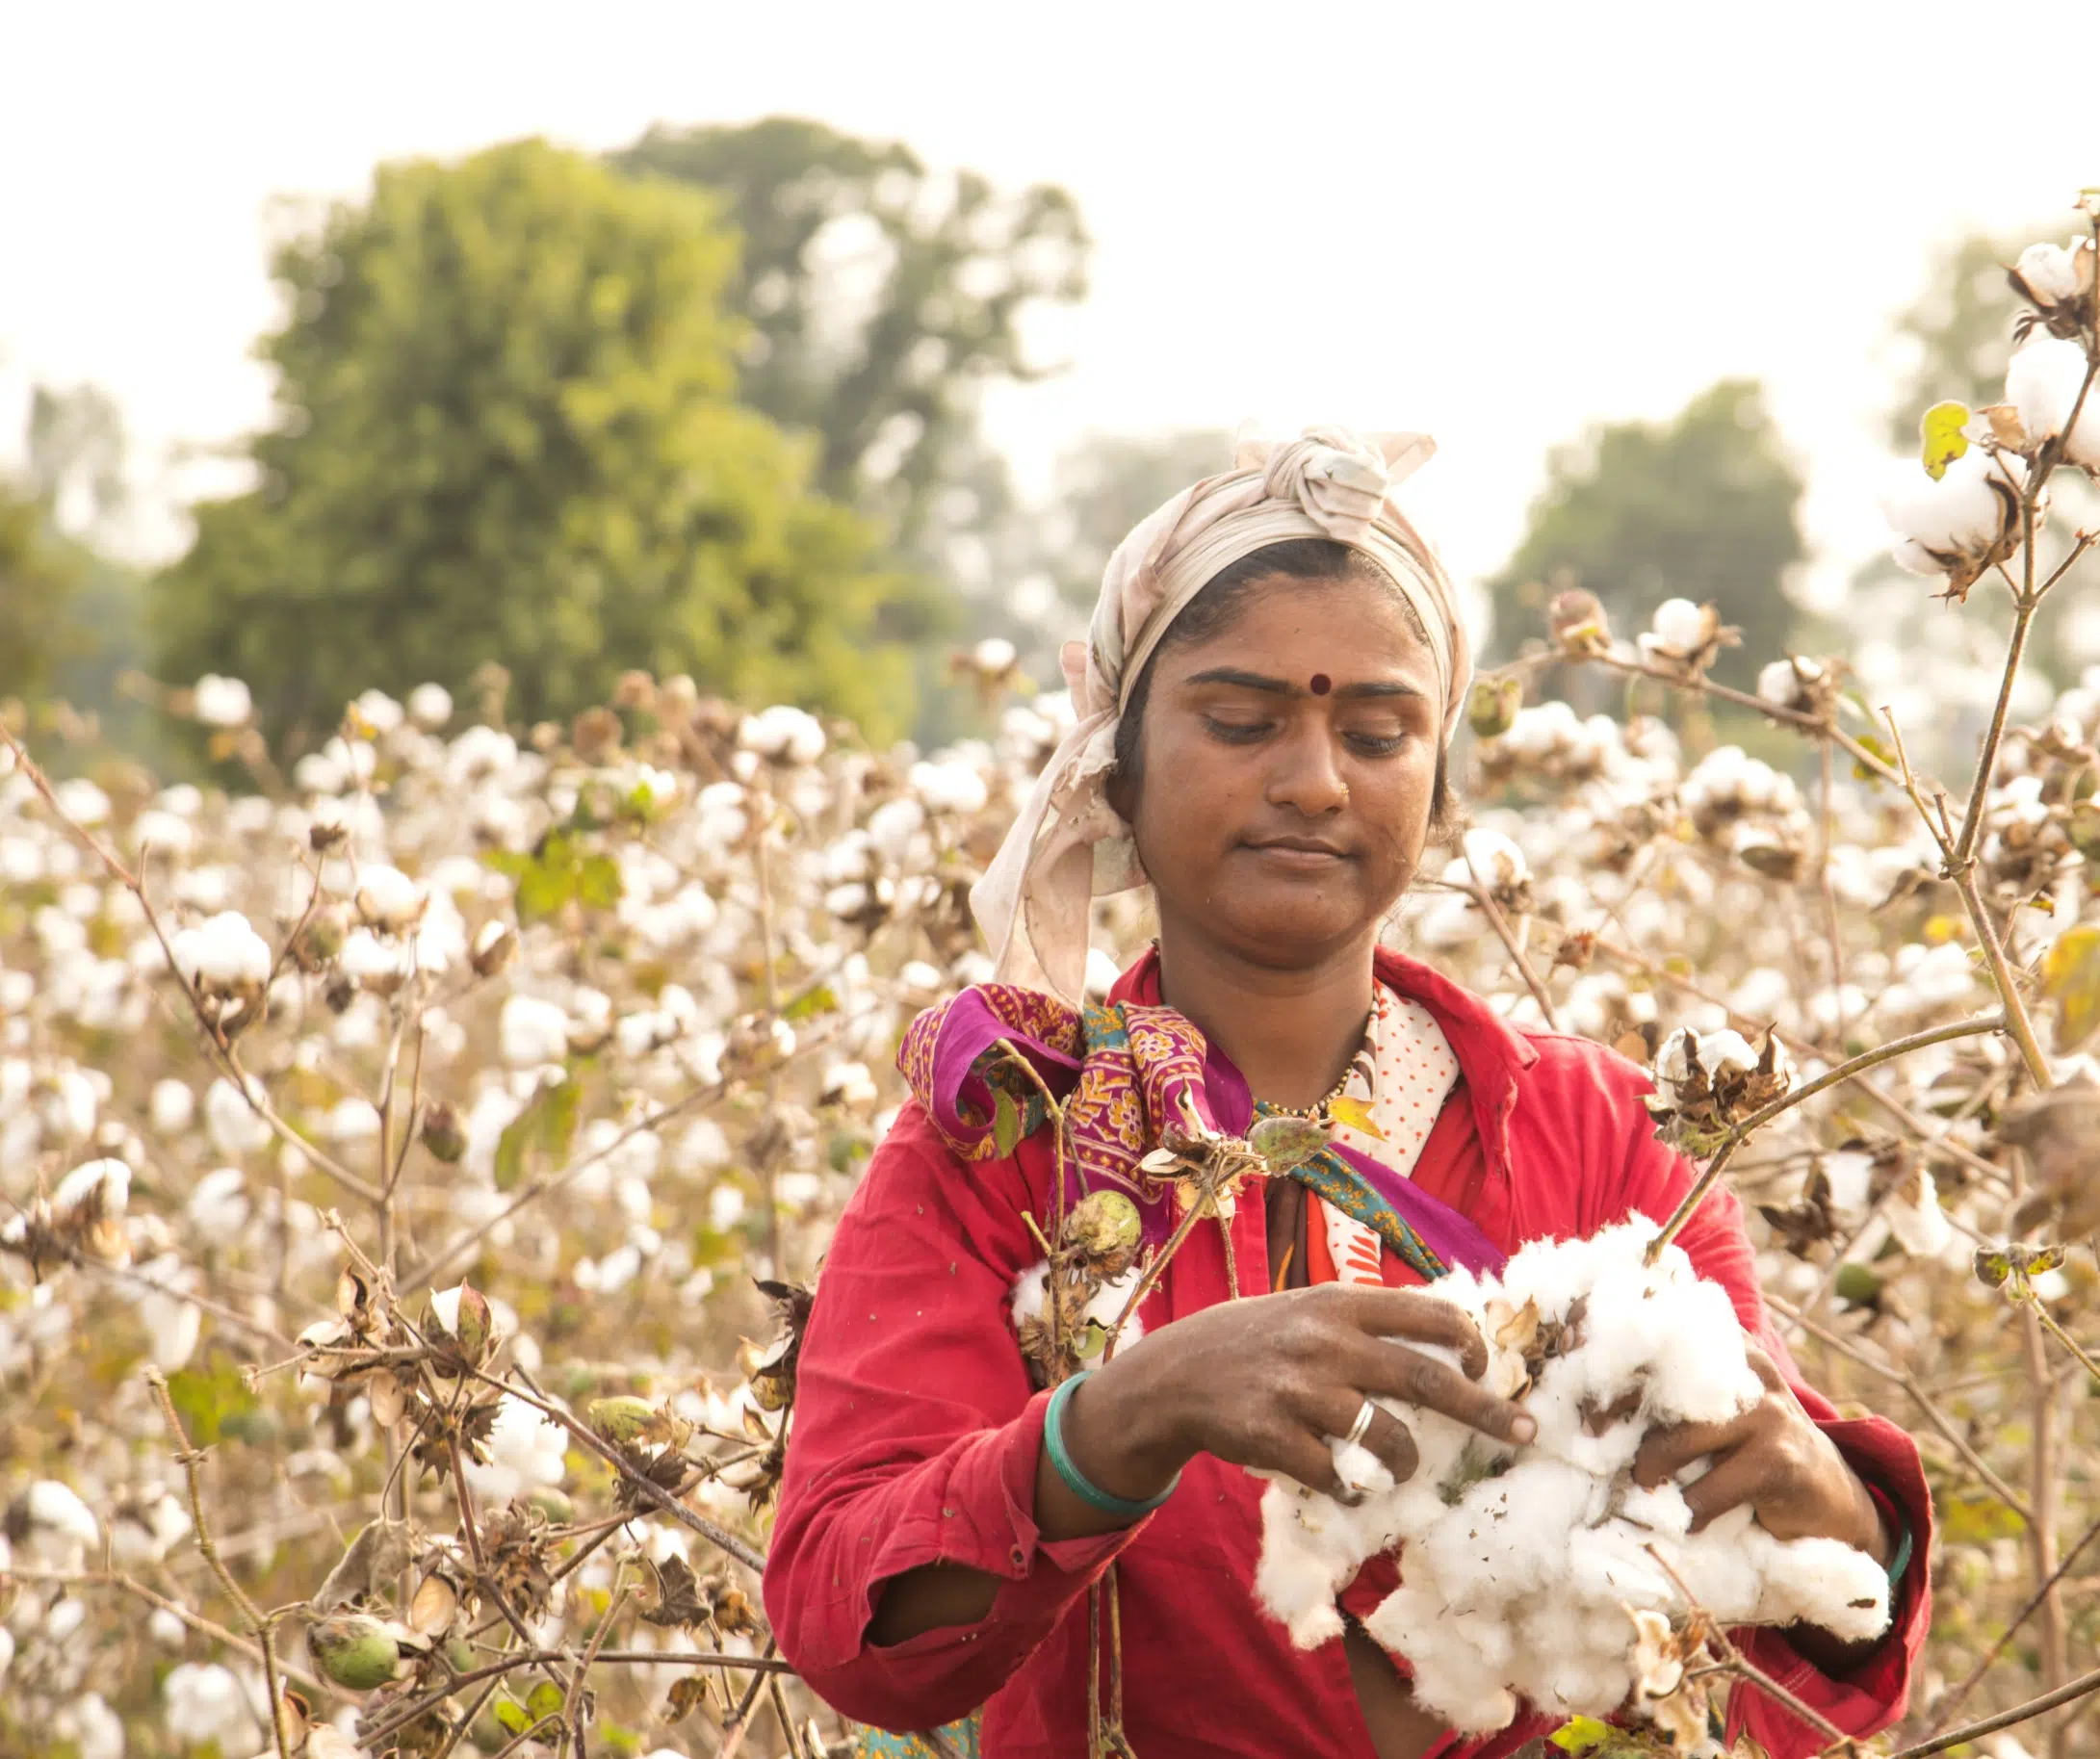 bernicia-stanley-stella-coton-bio-textile-remuneration-travailleurs-bangladesh